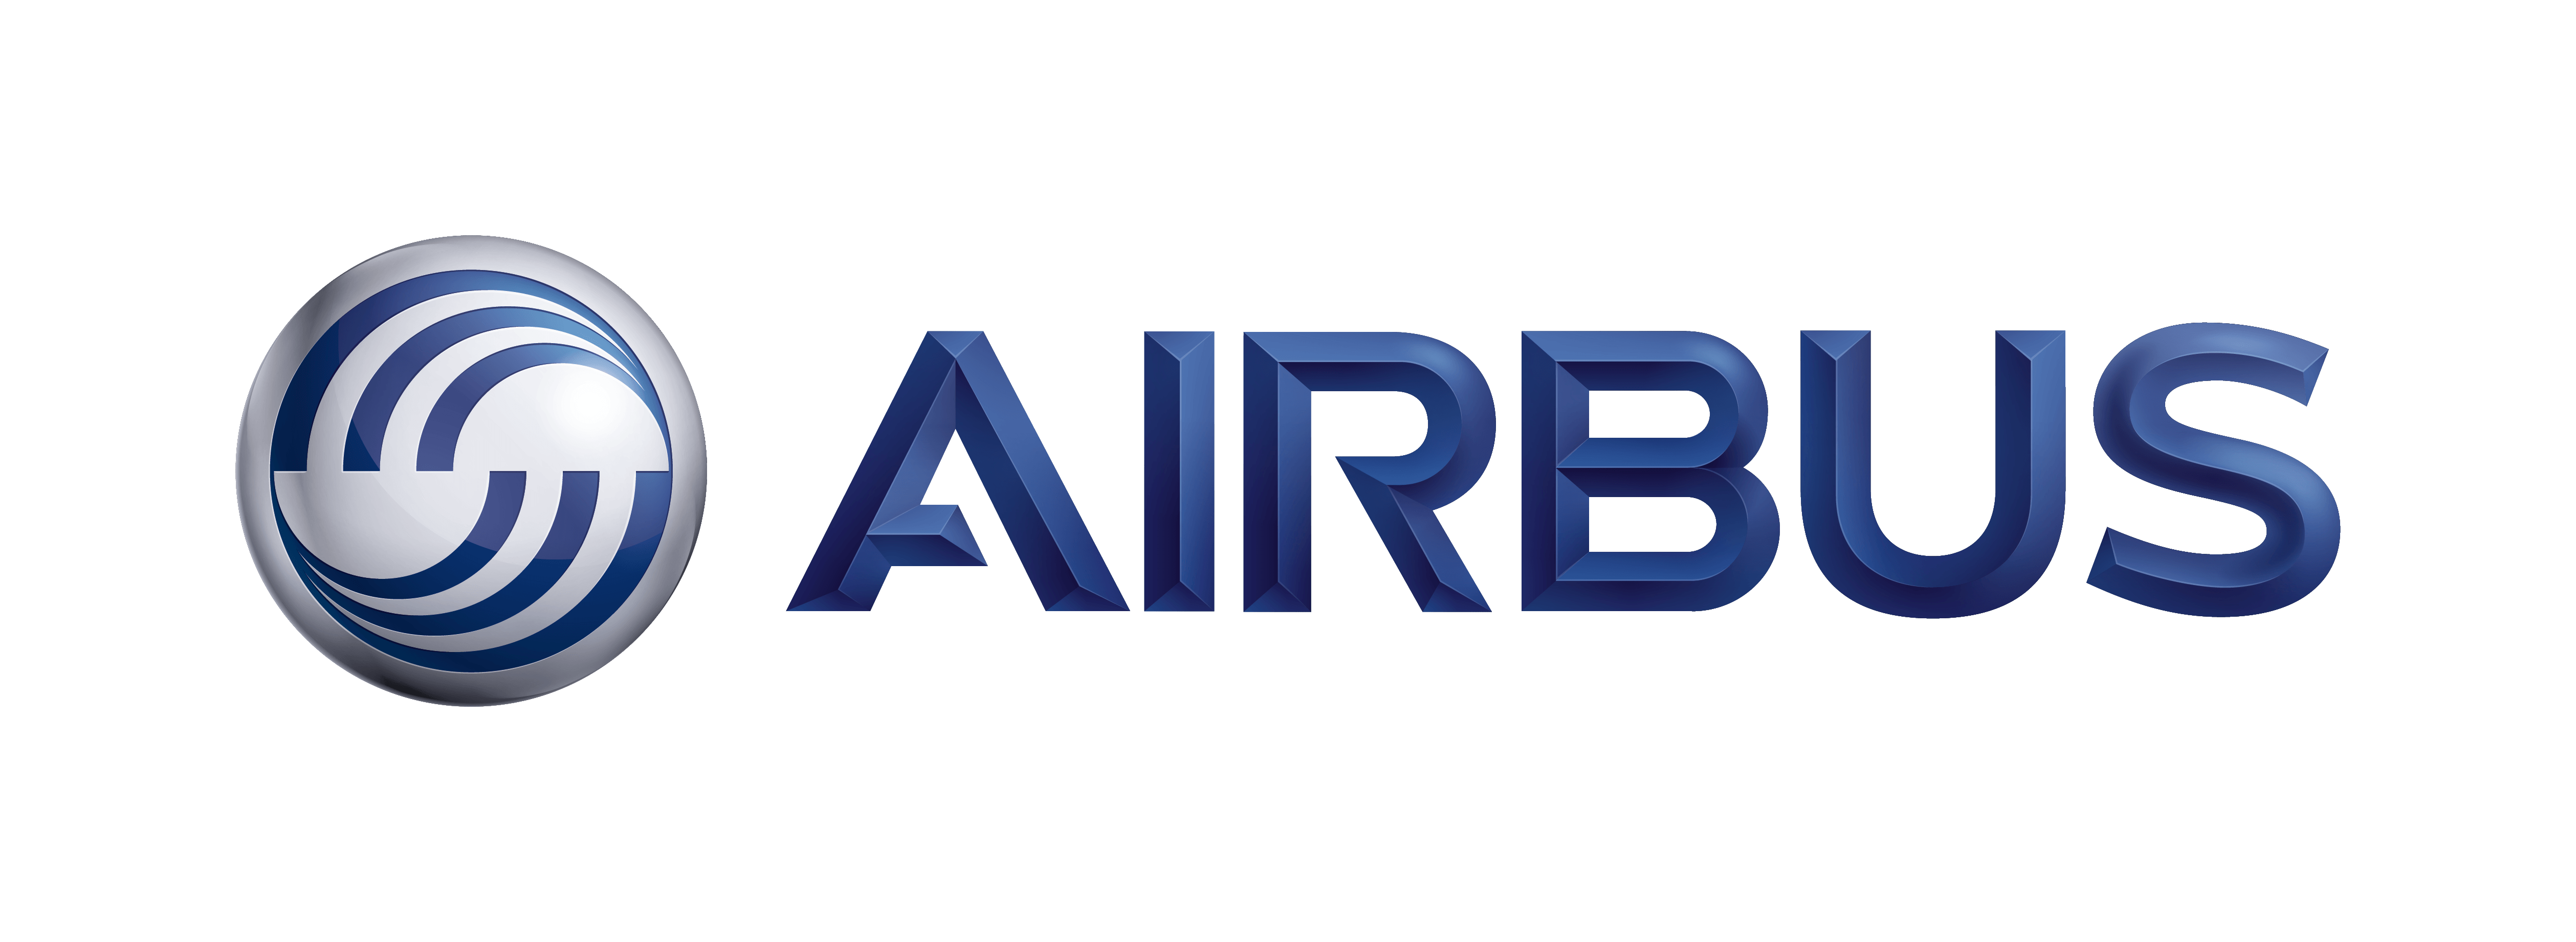 Airbus Logo Wallpaper